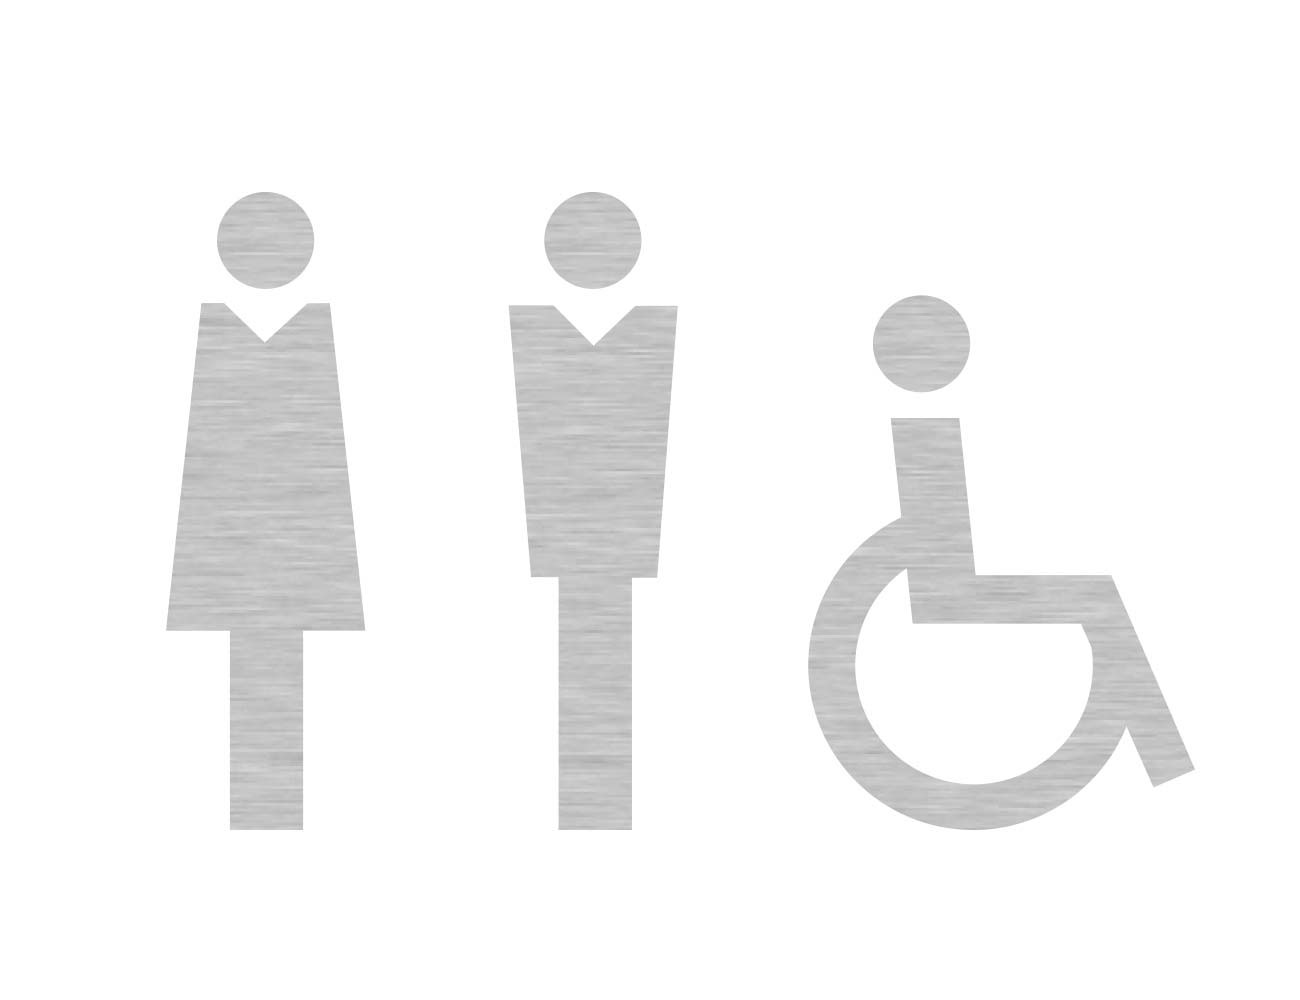 WC Piktogramme - Variante 1  - Dame/Herr/Rollstuhl